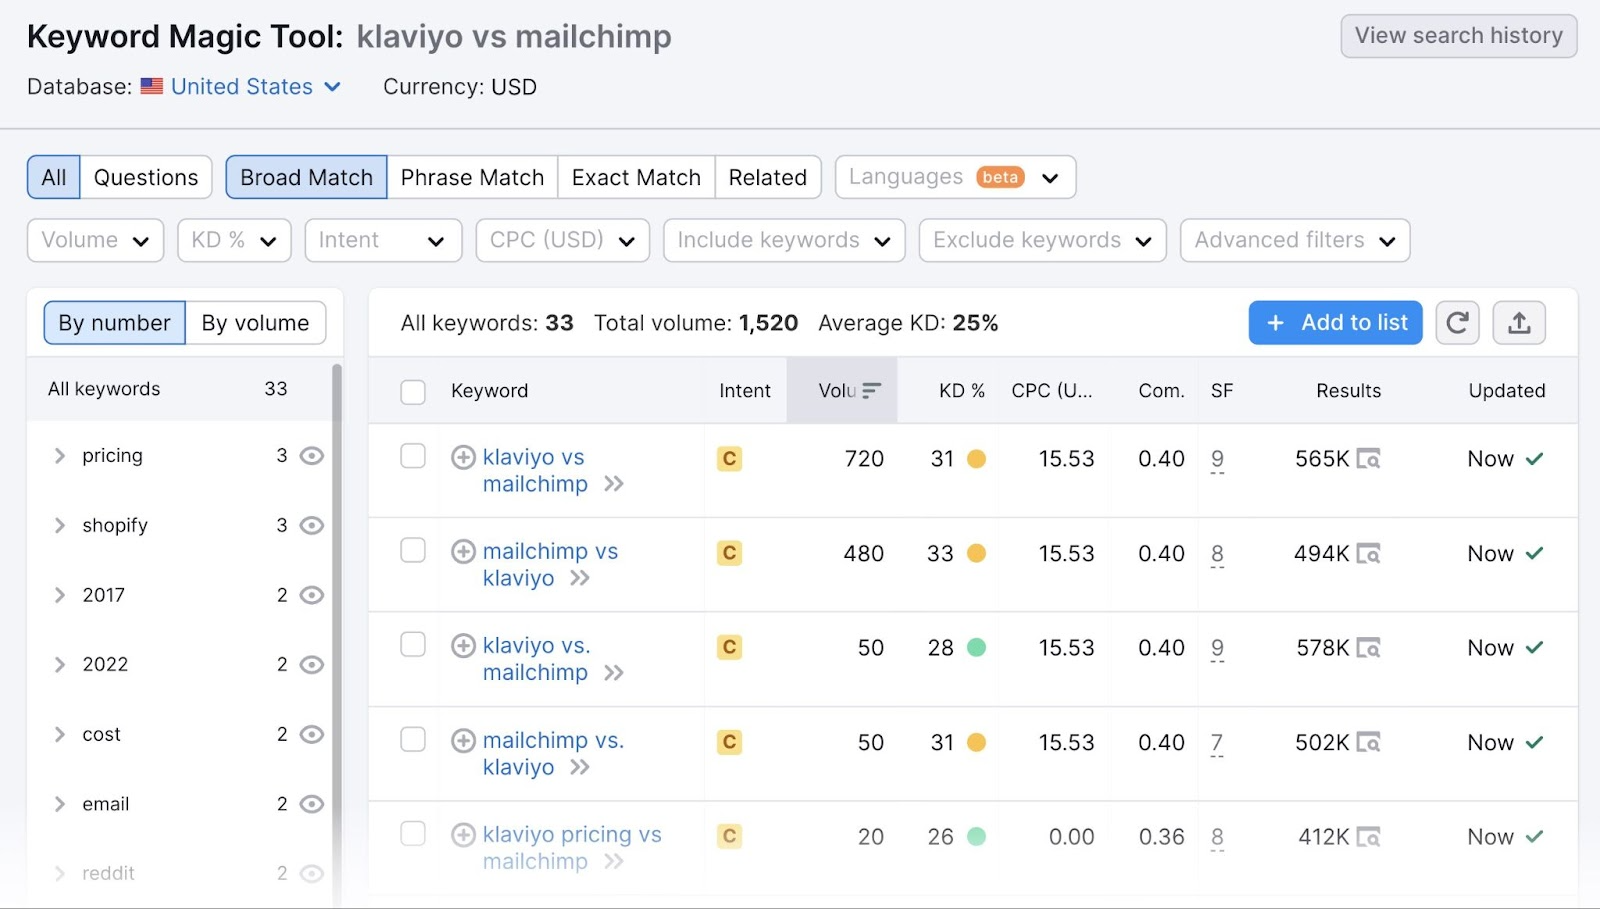 “klaviyo vs mailchimp” search results in Keyword Magic Tool